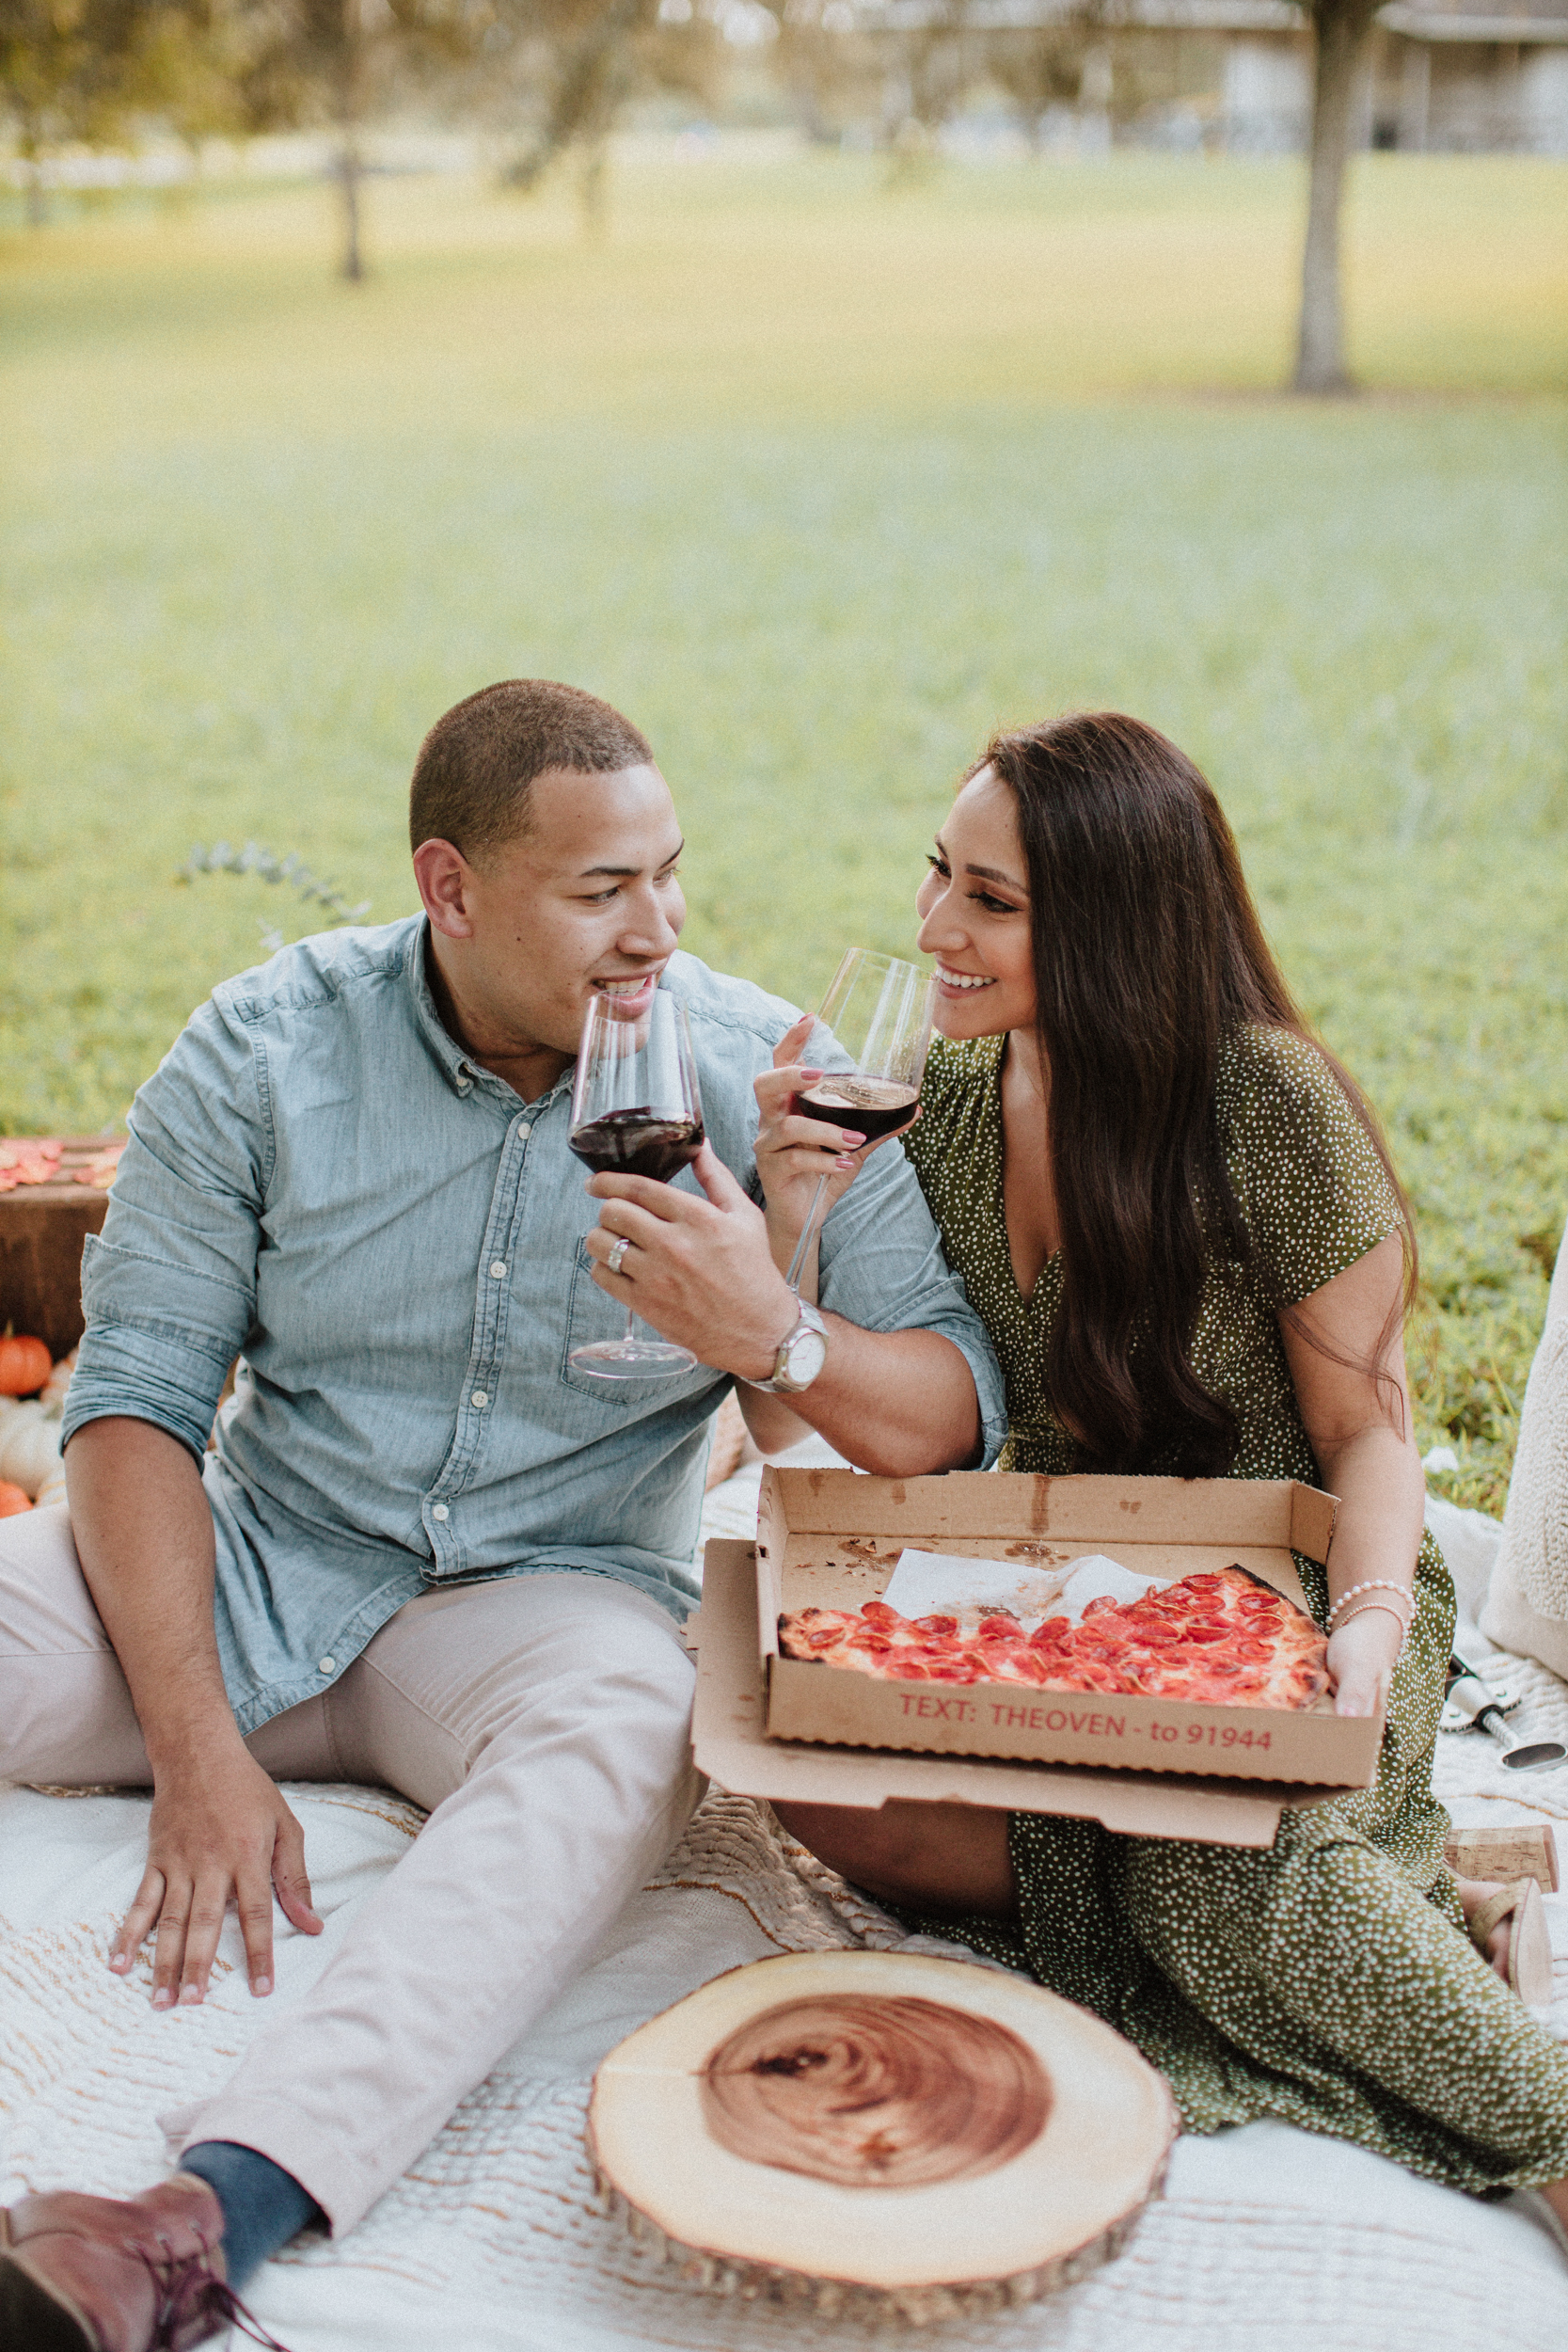 Fall Photoshoot - Pizza & Wine Picnic